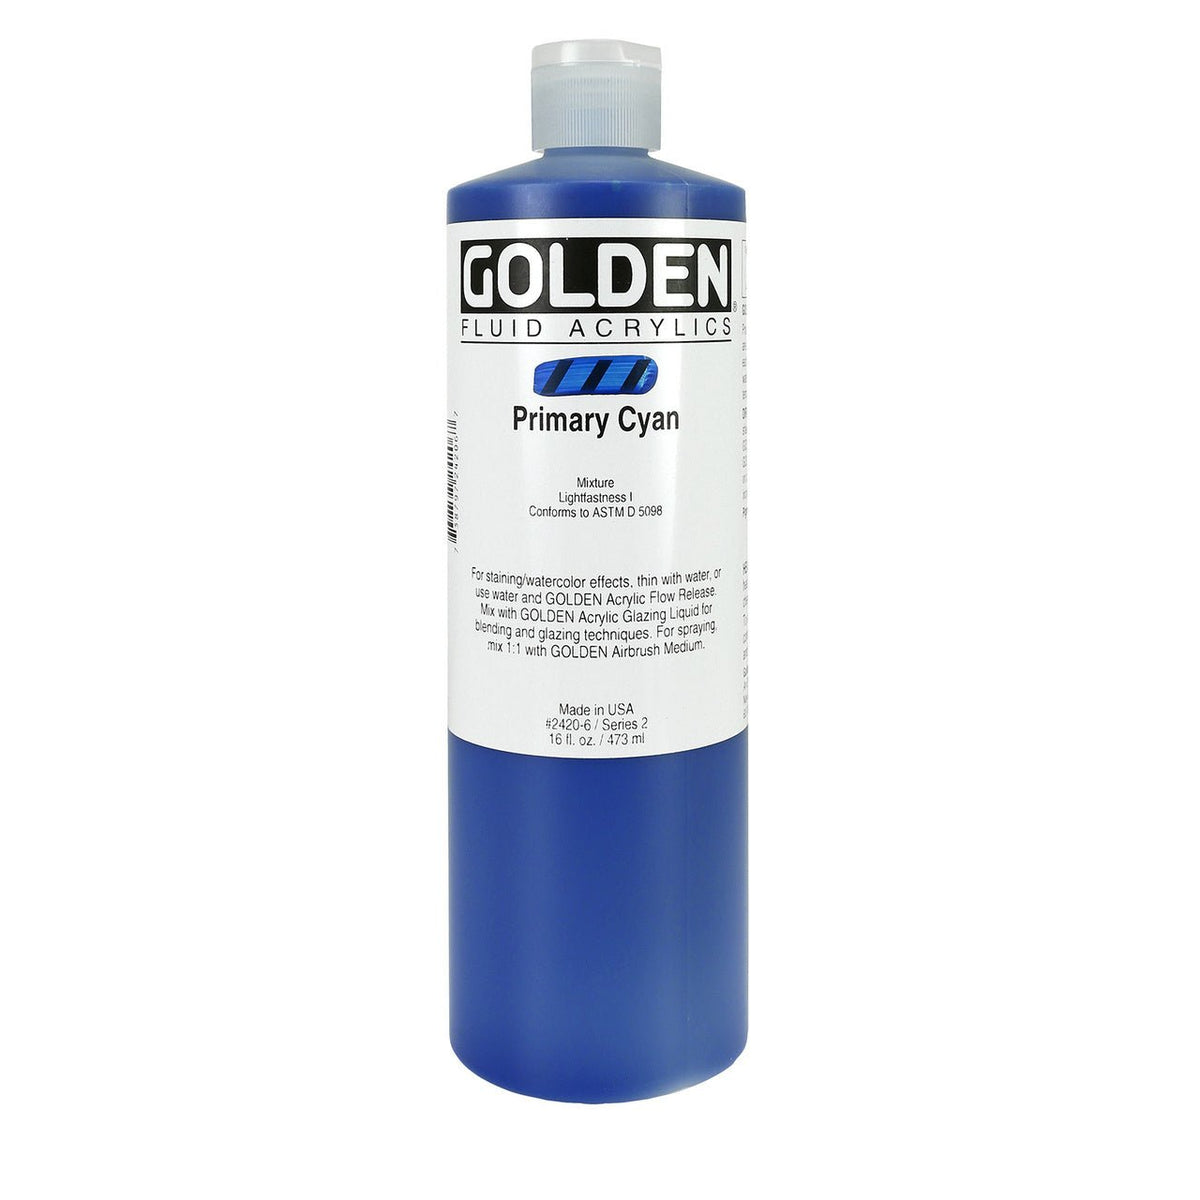 Golden Fluid Acrylic Primary Cyan 16 oz - merriartist.com